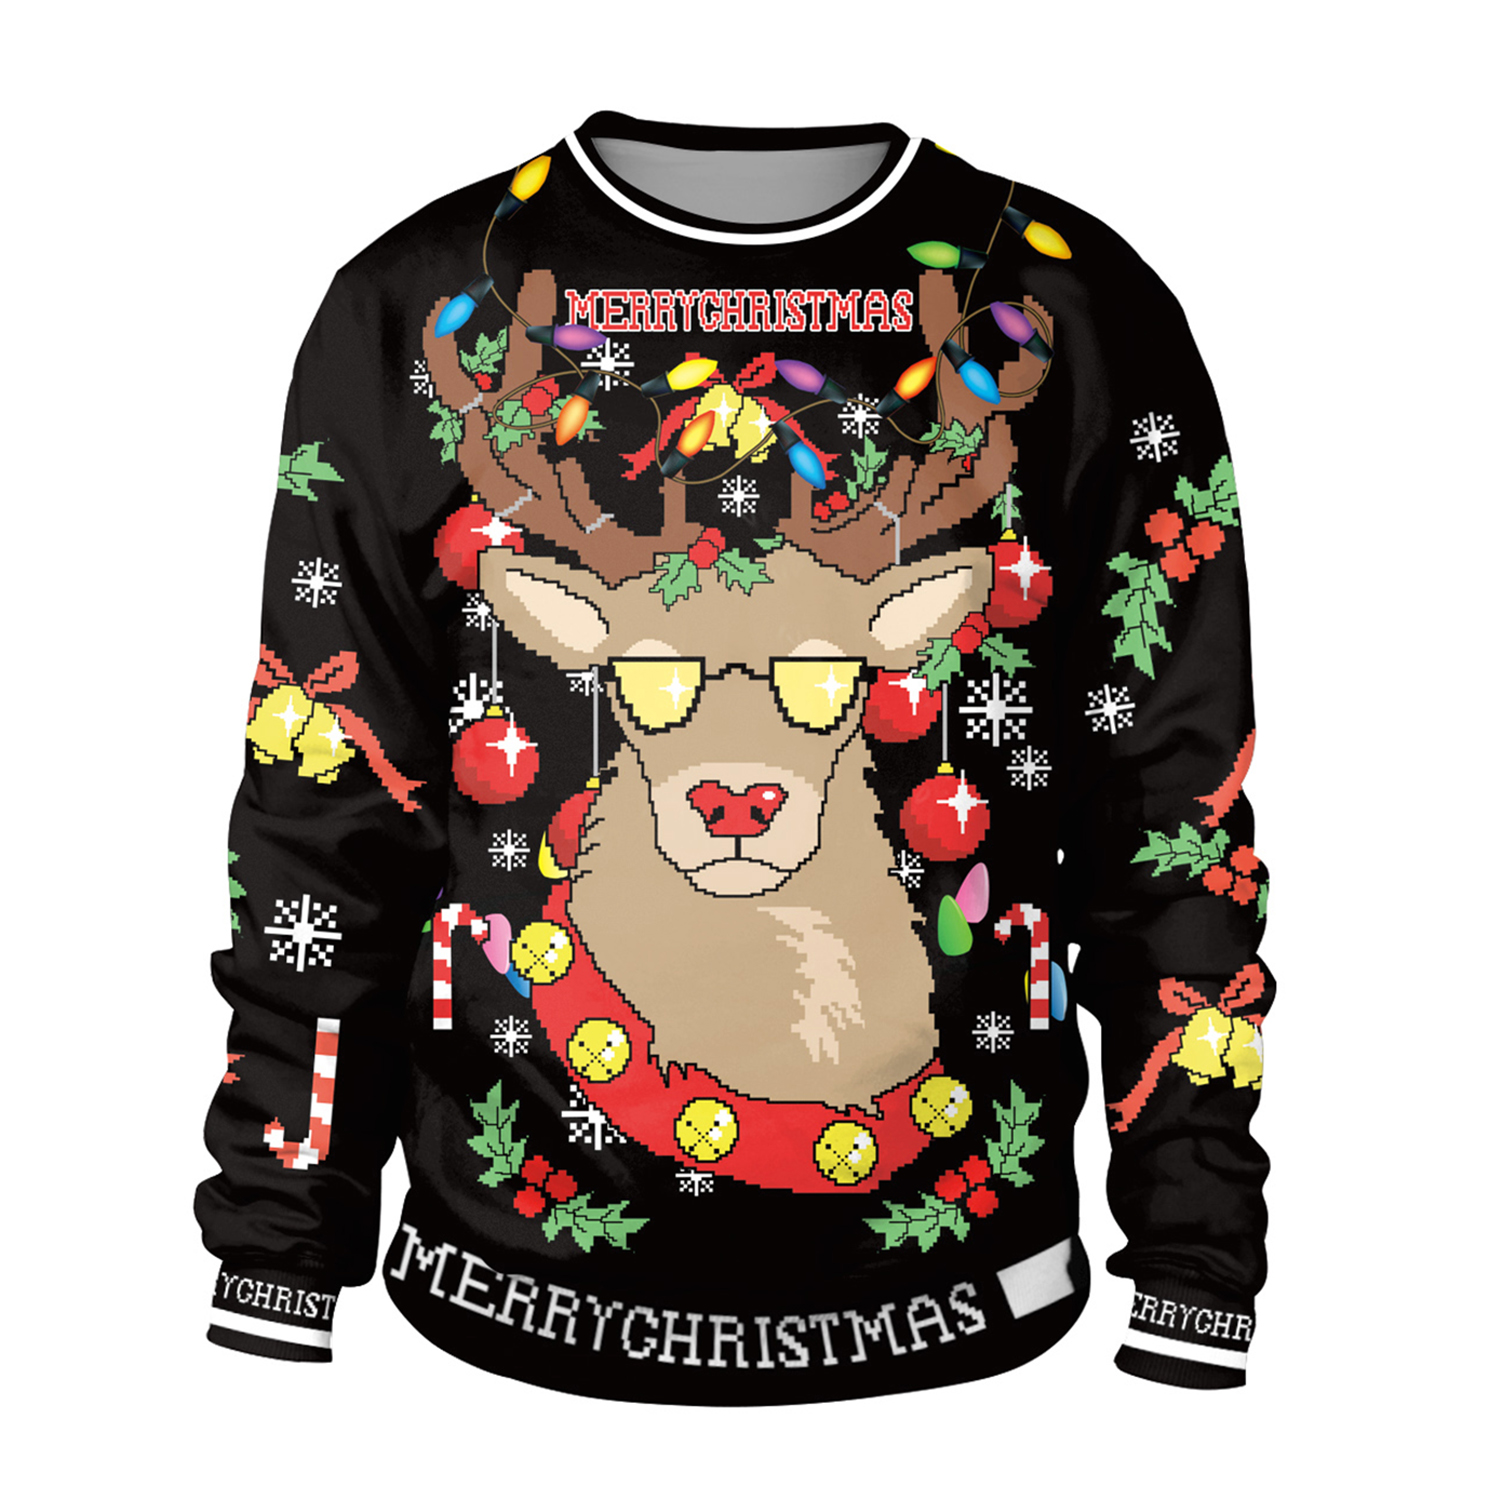 Kleding Gender-neutrale kleding volwassenen Hoodies & Sweatshirts Sweatshirts Merry Christmas Sweatshirt,Merry Christmas Reindeer Sweatshirt,Flying Santa Reindeer,Christmas Gift,Christmas Hoodie,Winter Sweatshirt 